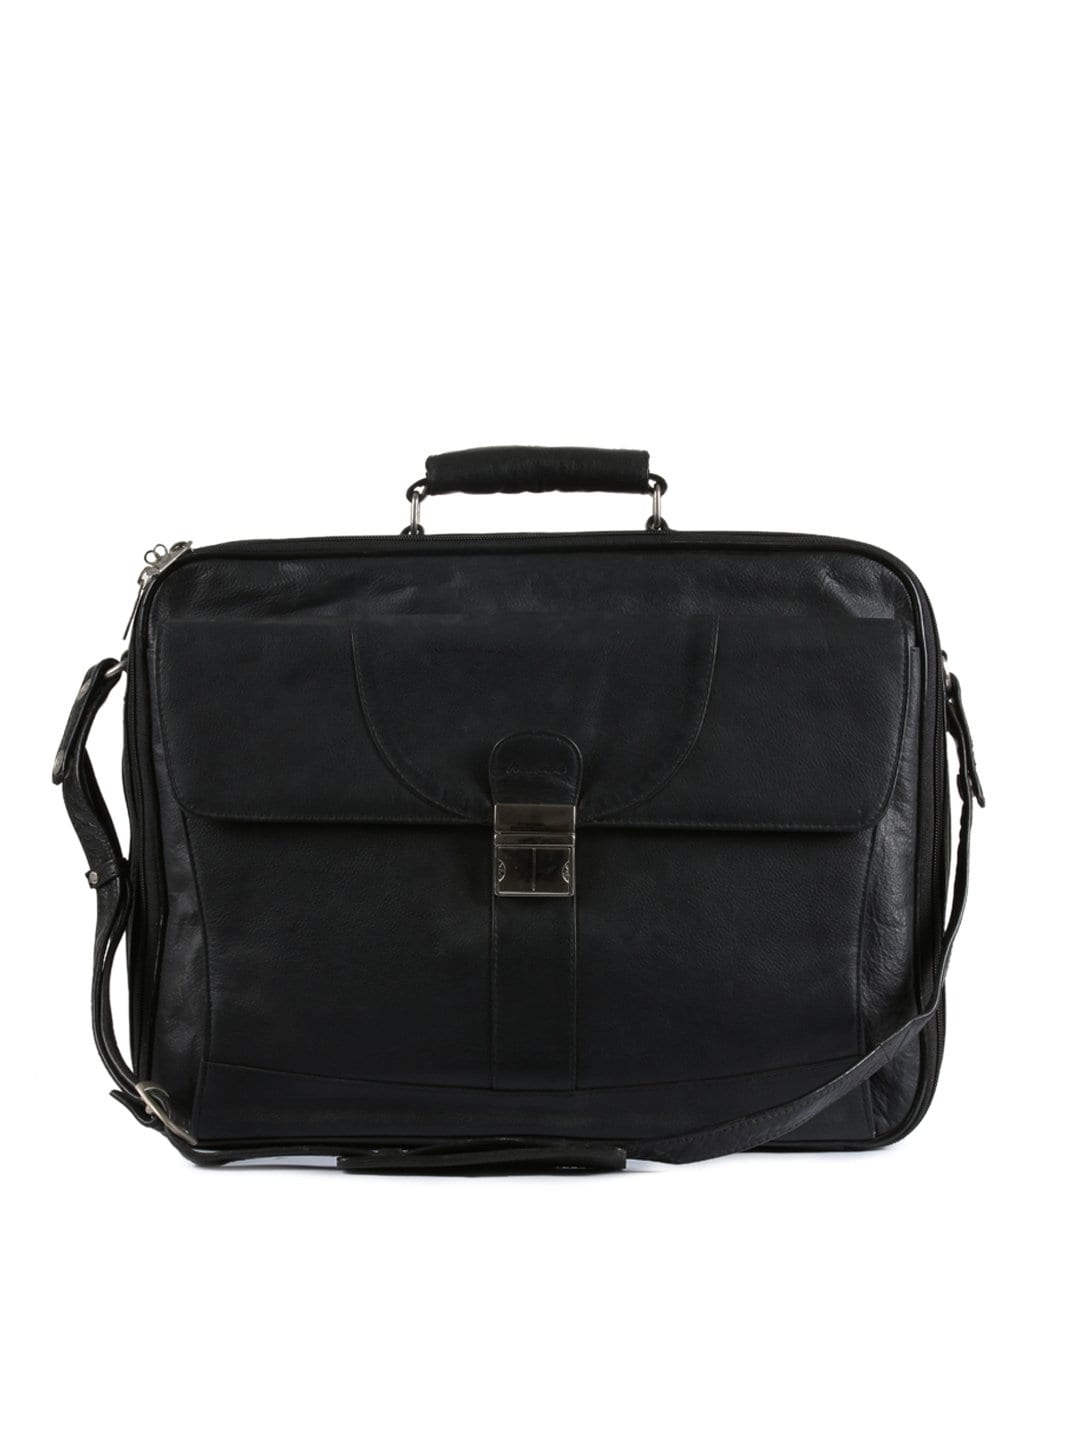 New Hide Unisex Black Leather Laptop Bag